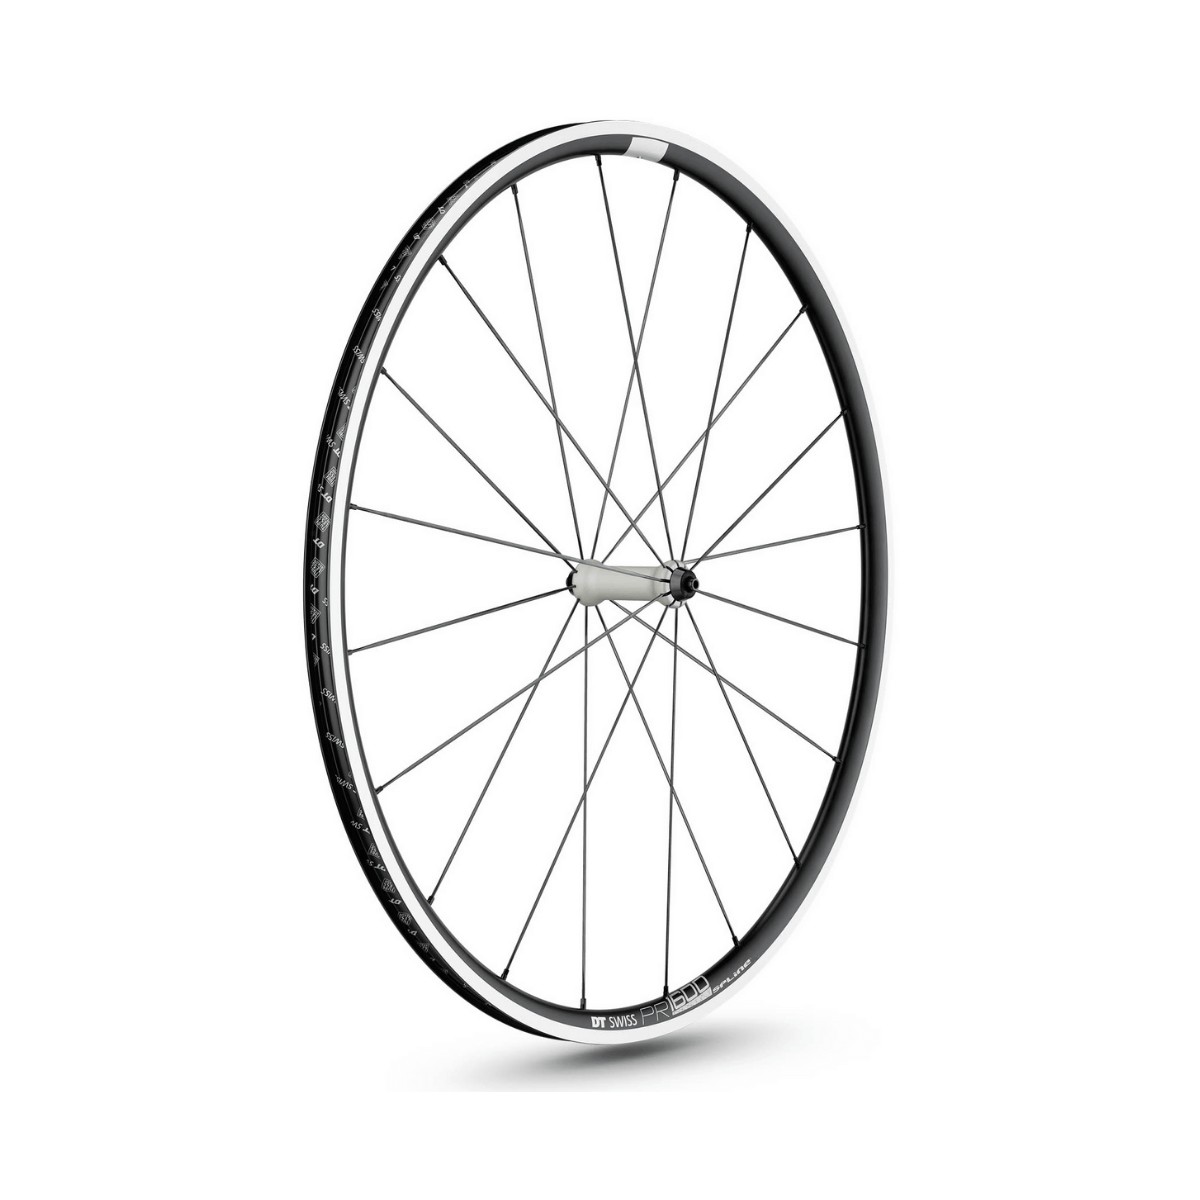 Photos - Bike Wheel DT Swiss 1600 PR SPLINE 23 5/100 MM Front Wheel WPR1600AAQXSA04447